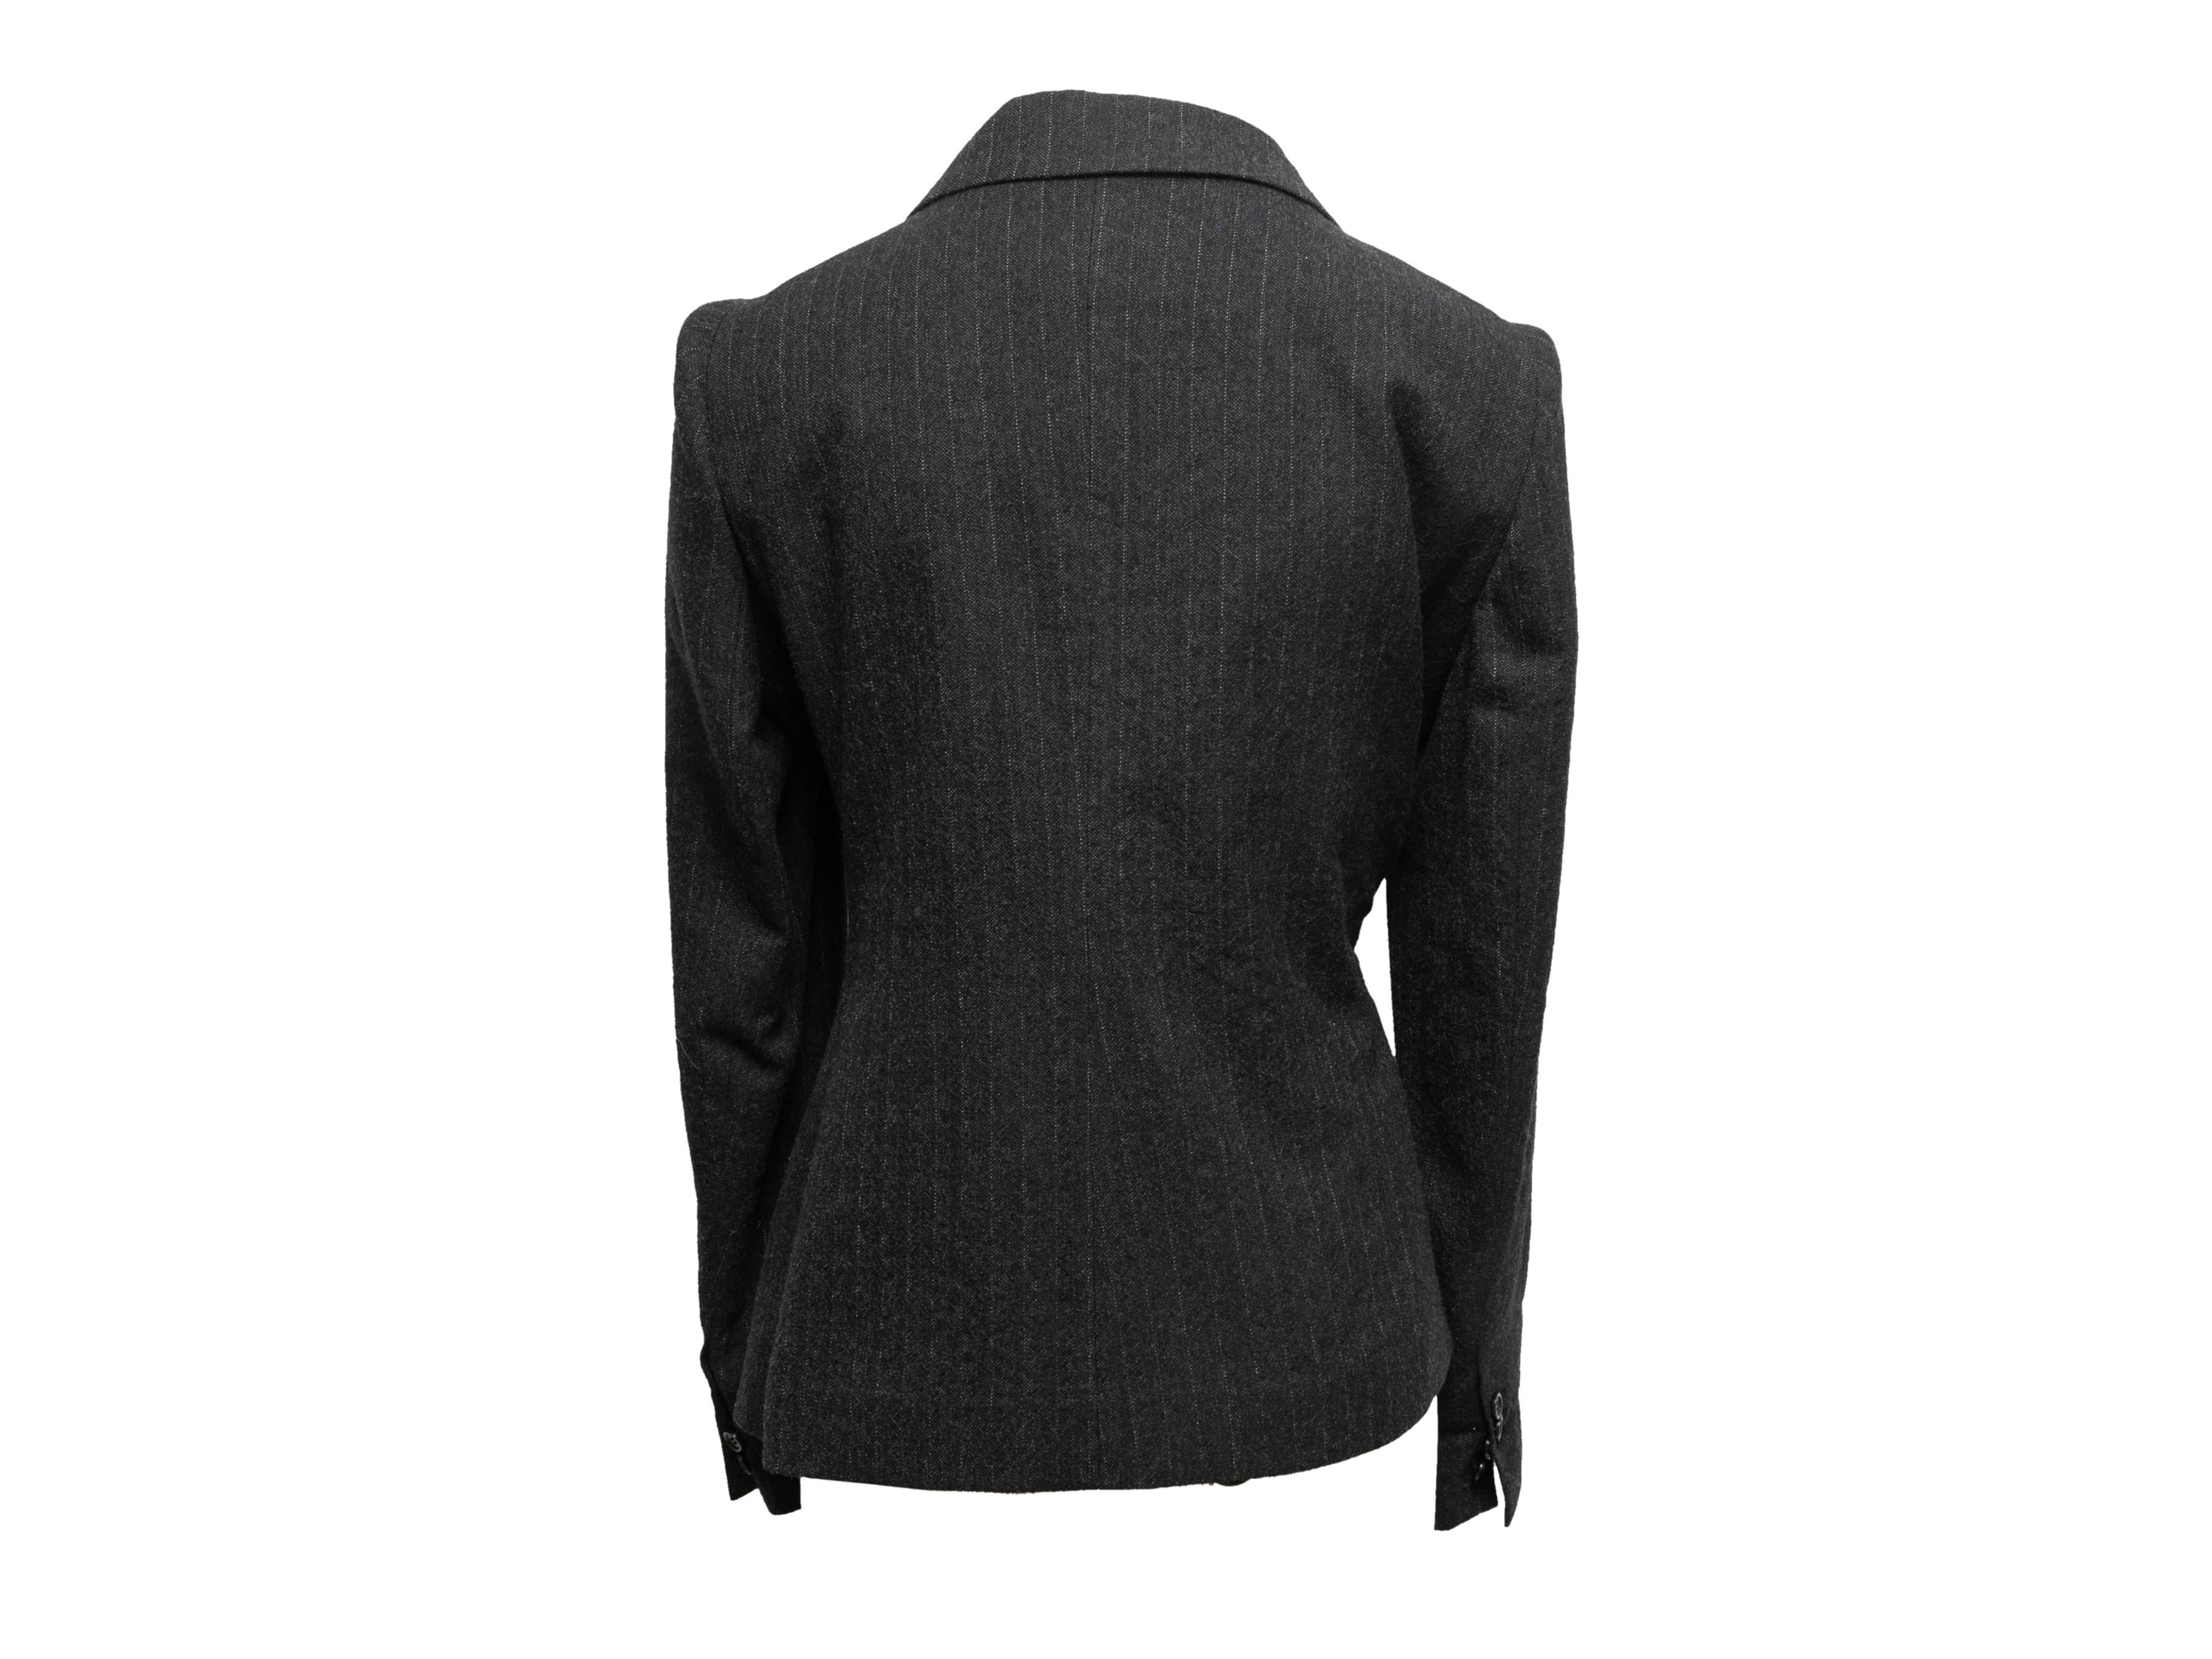 Charcoal virgin wool pinstriped blazer by Maison Margiela. Circa 2017. Peaked lapels. Asymmetrical front closure. 28